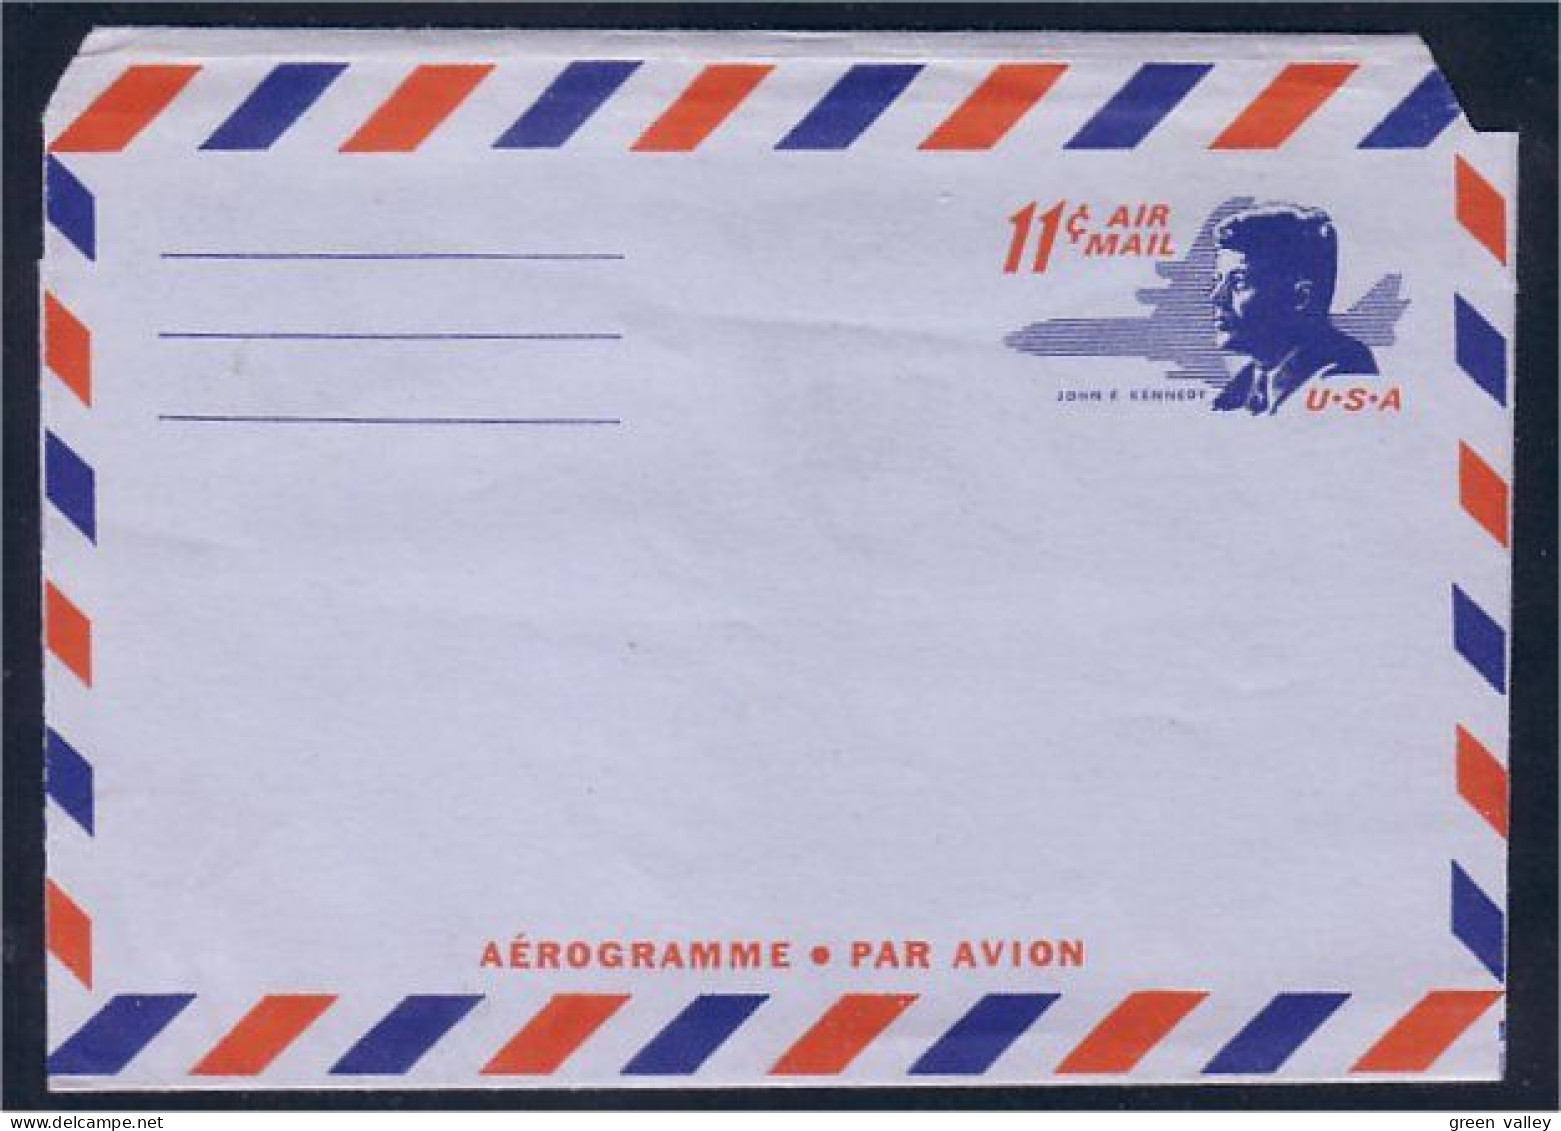 Aerogramme Air Letter Kennedy 11c Air Mail ( A82 109) - Indipendenza Stati Uniti